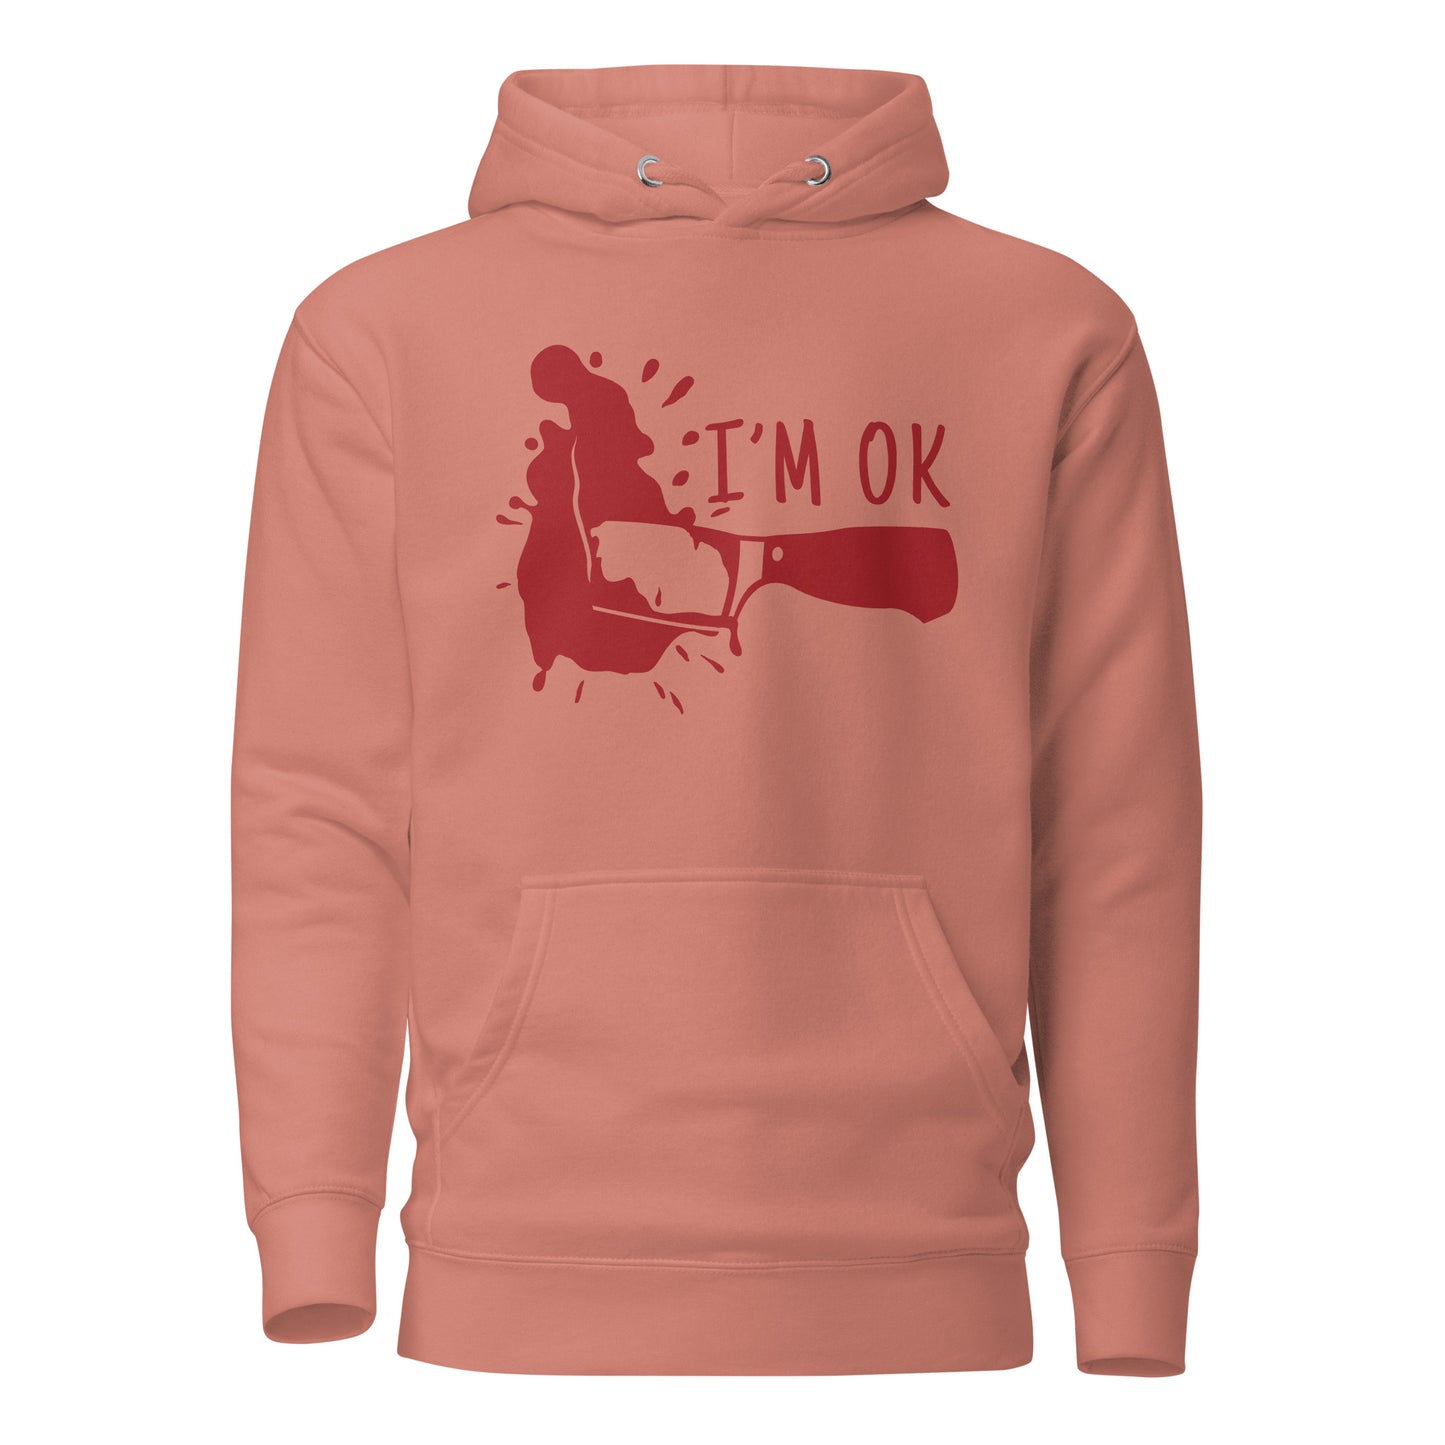 "I'm OK" men's hoodie